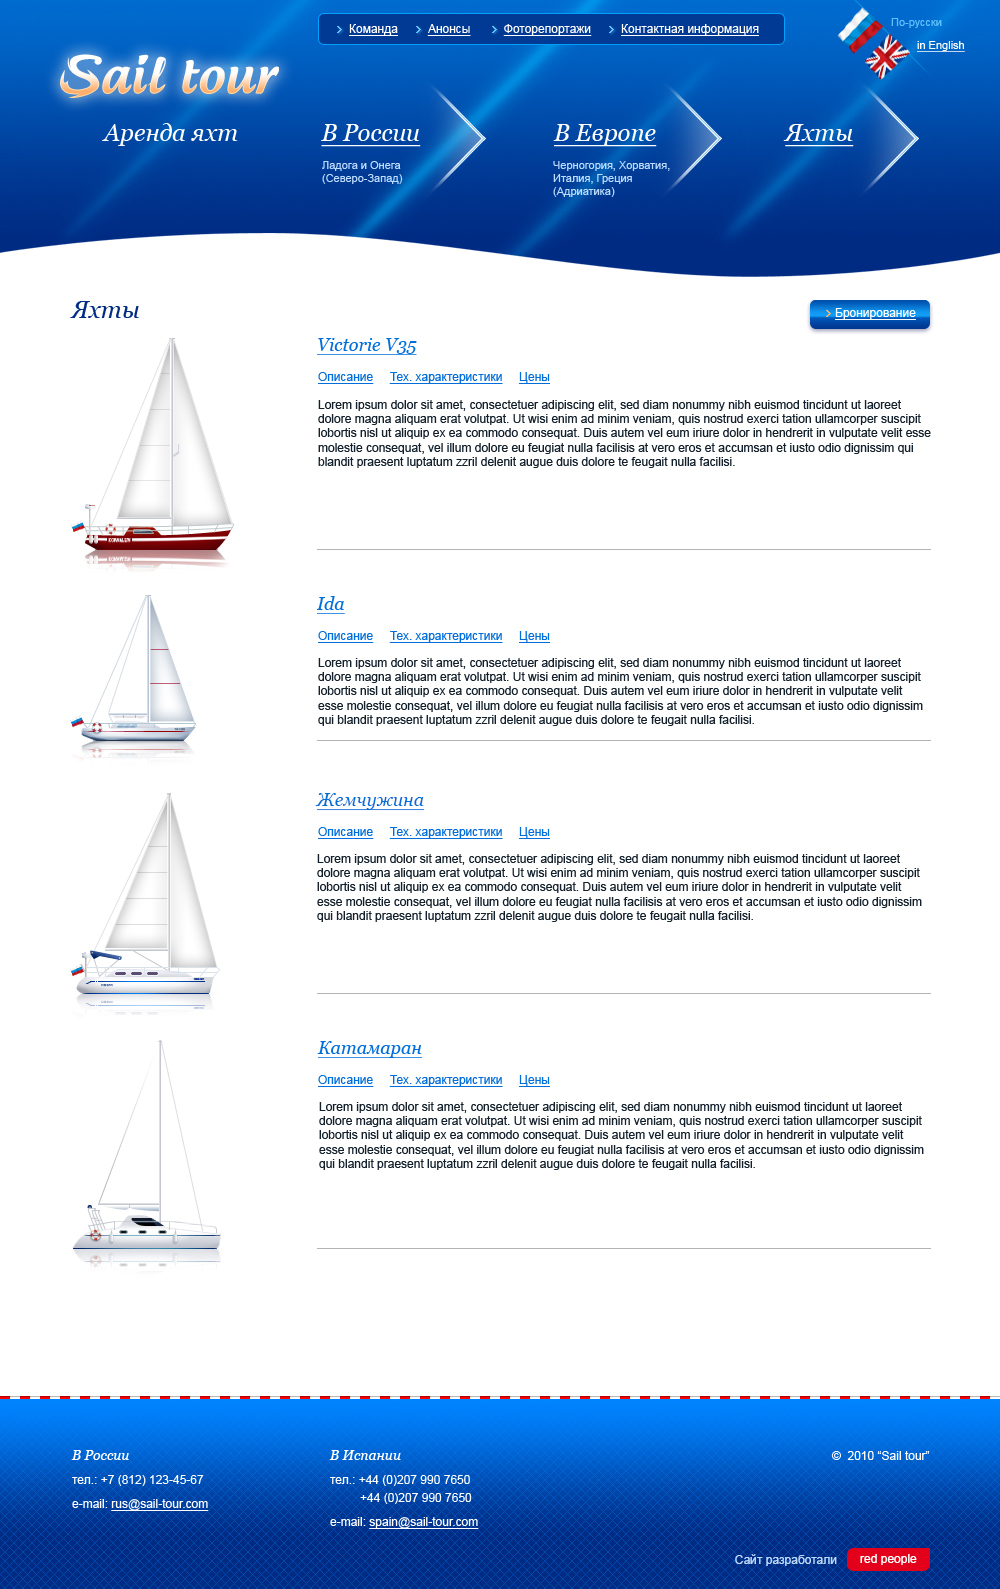 Sail tour - описание яхты